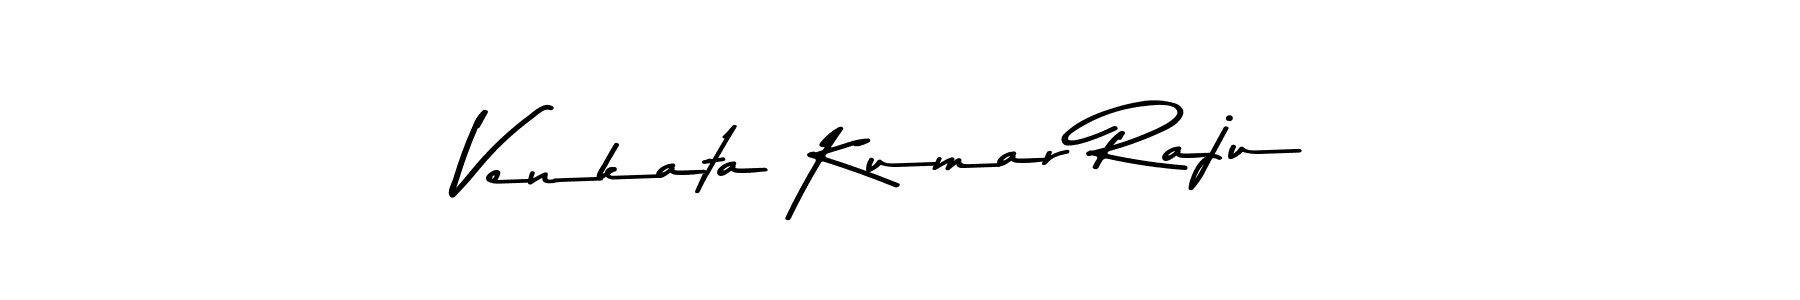 Make a beautiful signature design for name Venkata Kumar Raju. Use this online signature maker to create a handwritten signature for free. Venkata Kumar Raju signature style 9 images and pictures png